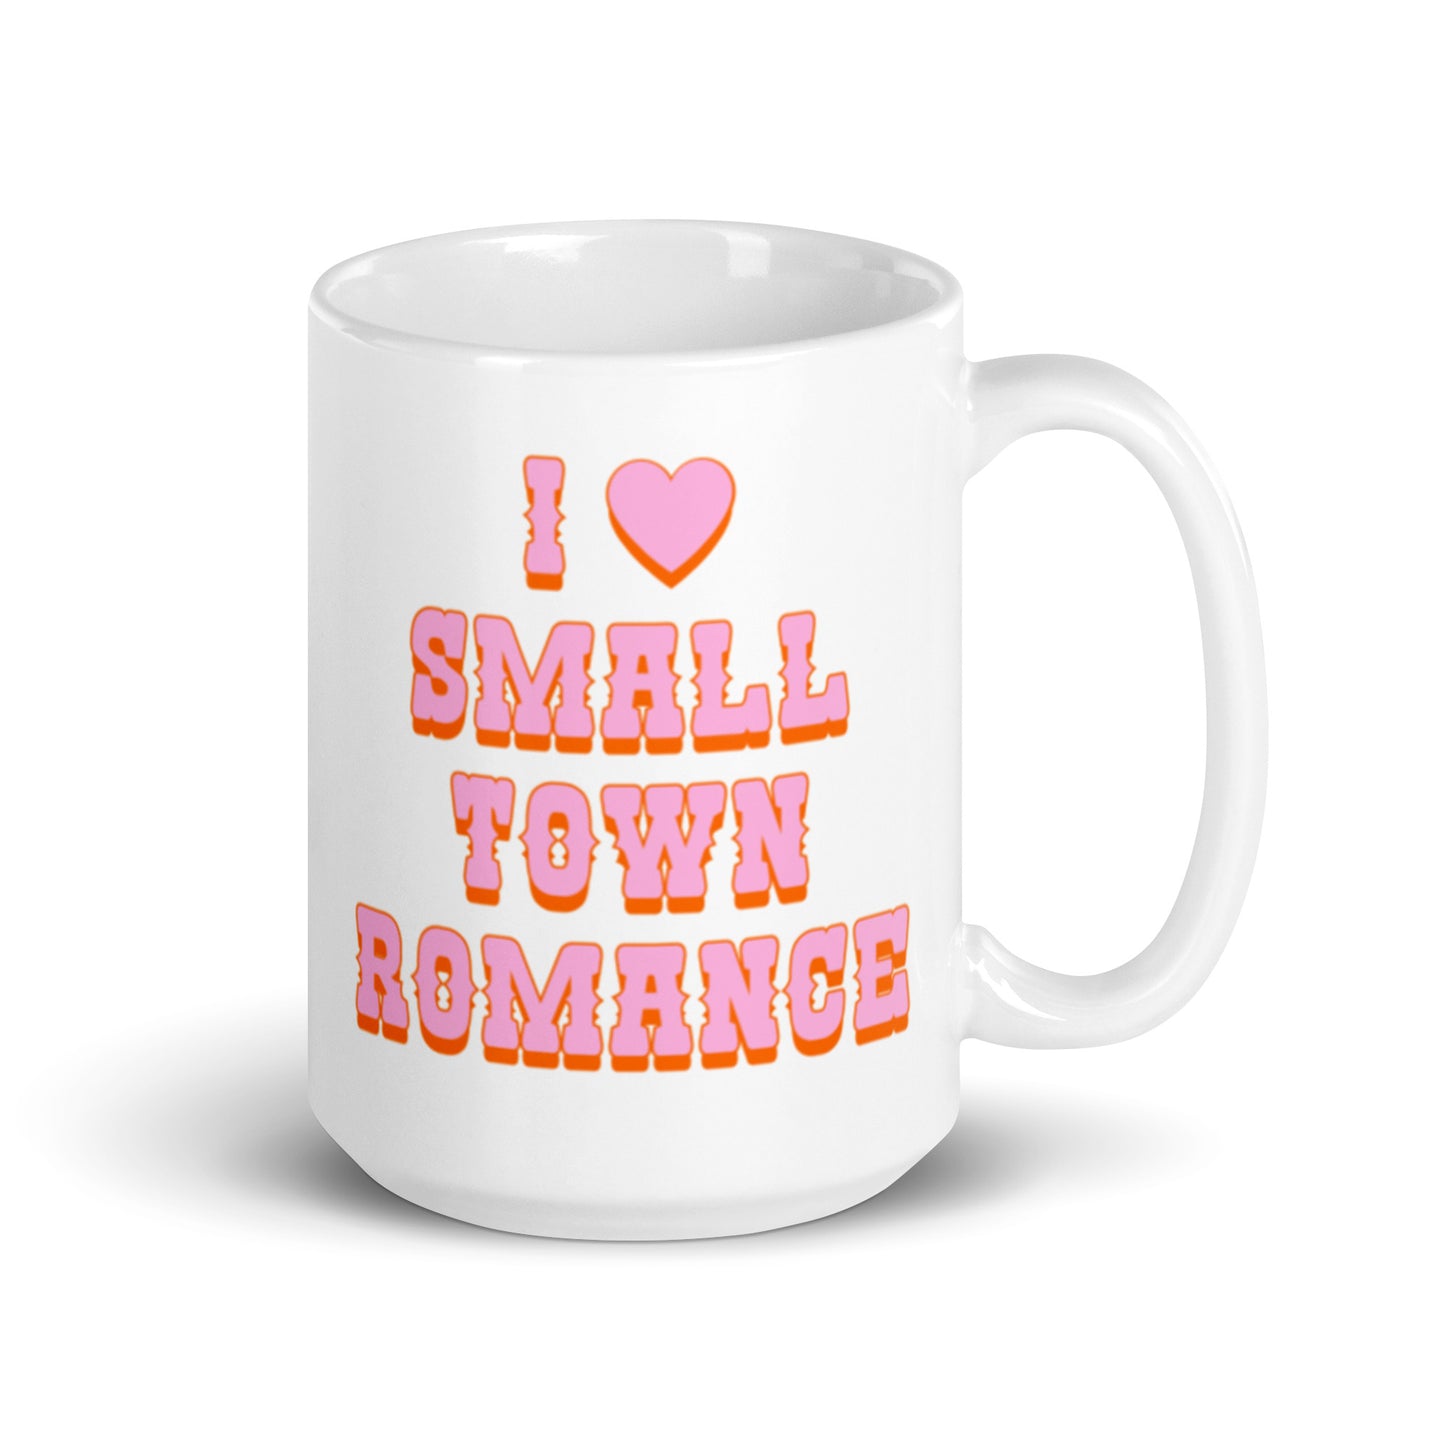 Small Town Romance Book Mug